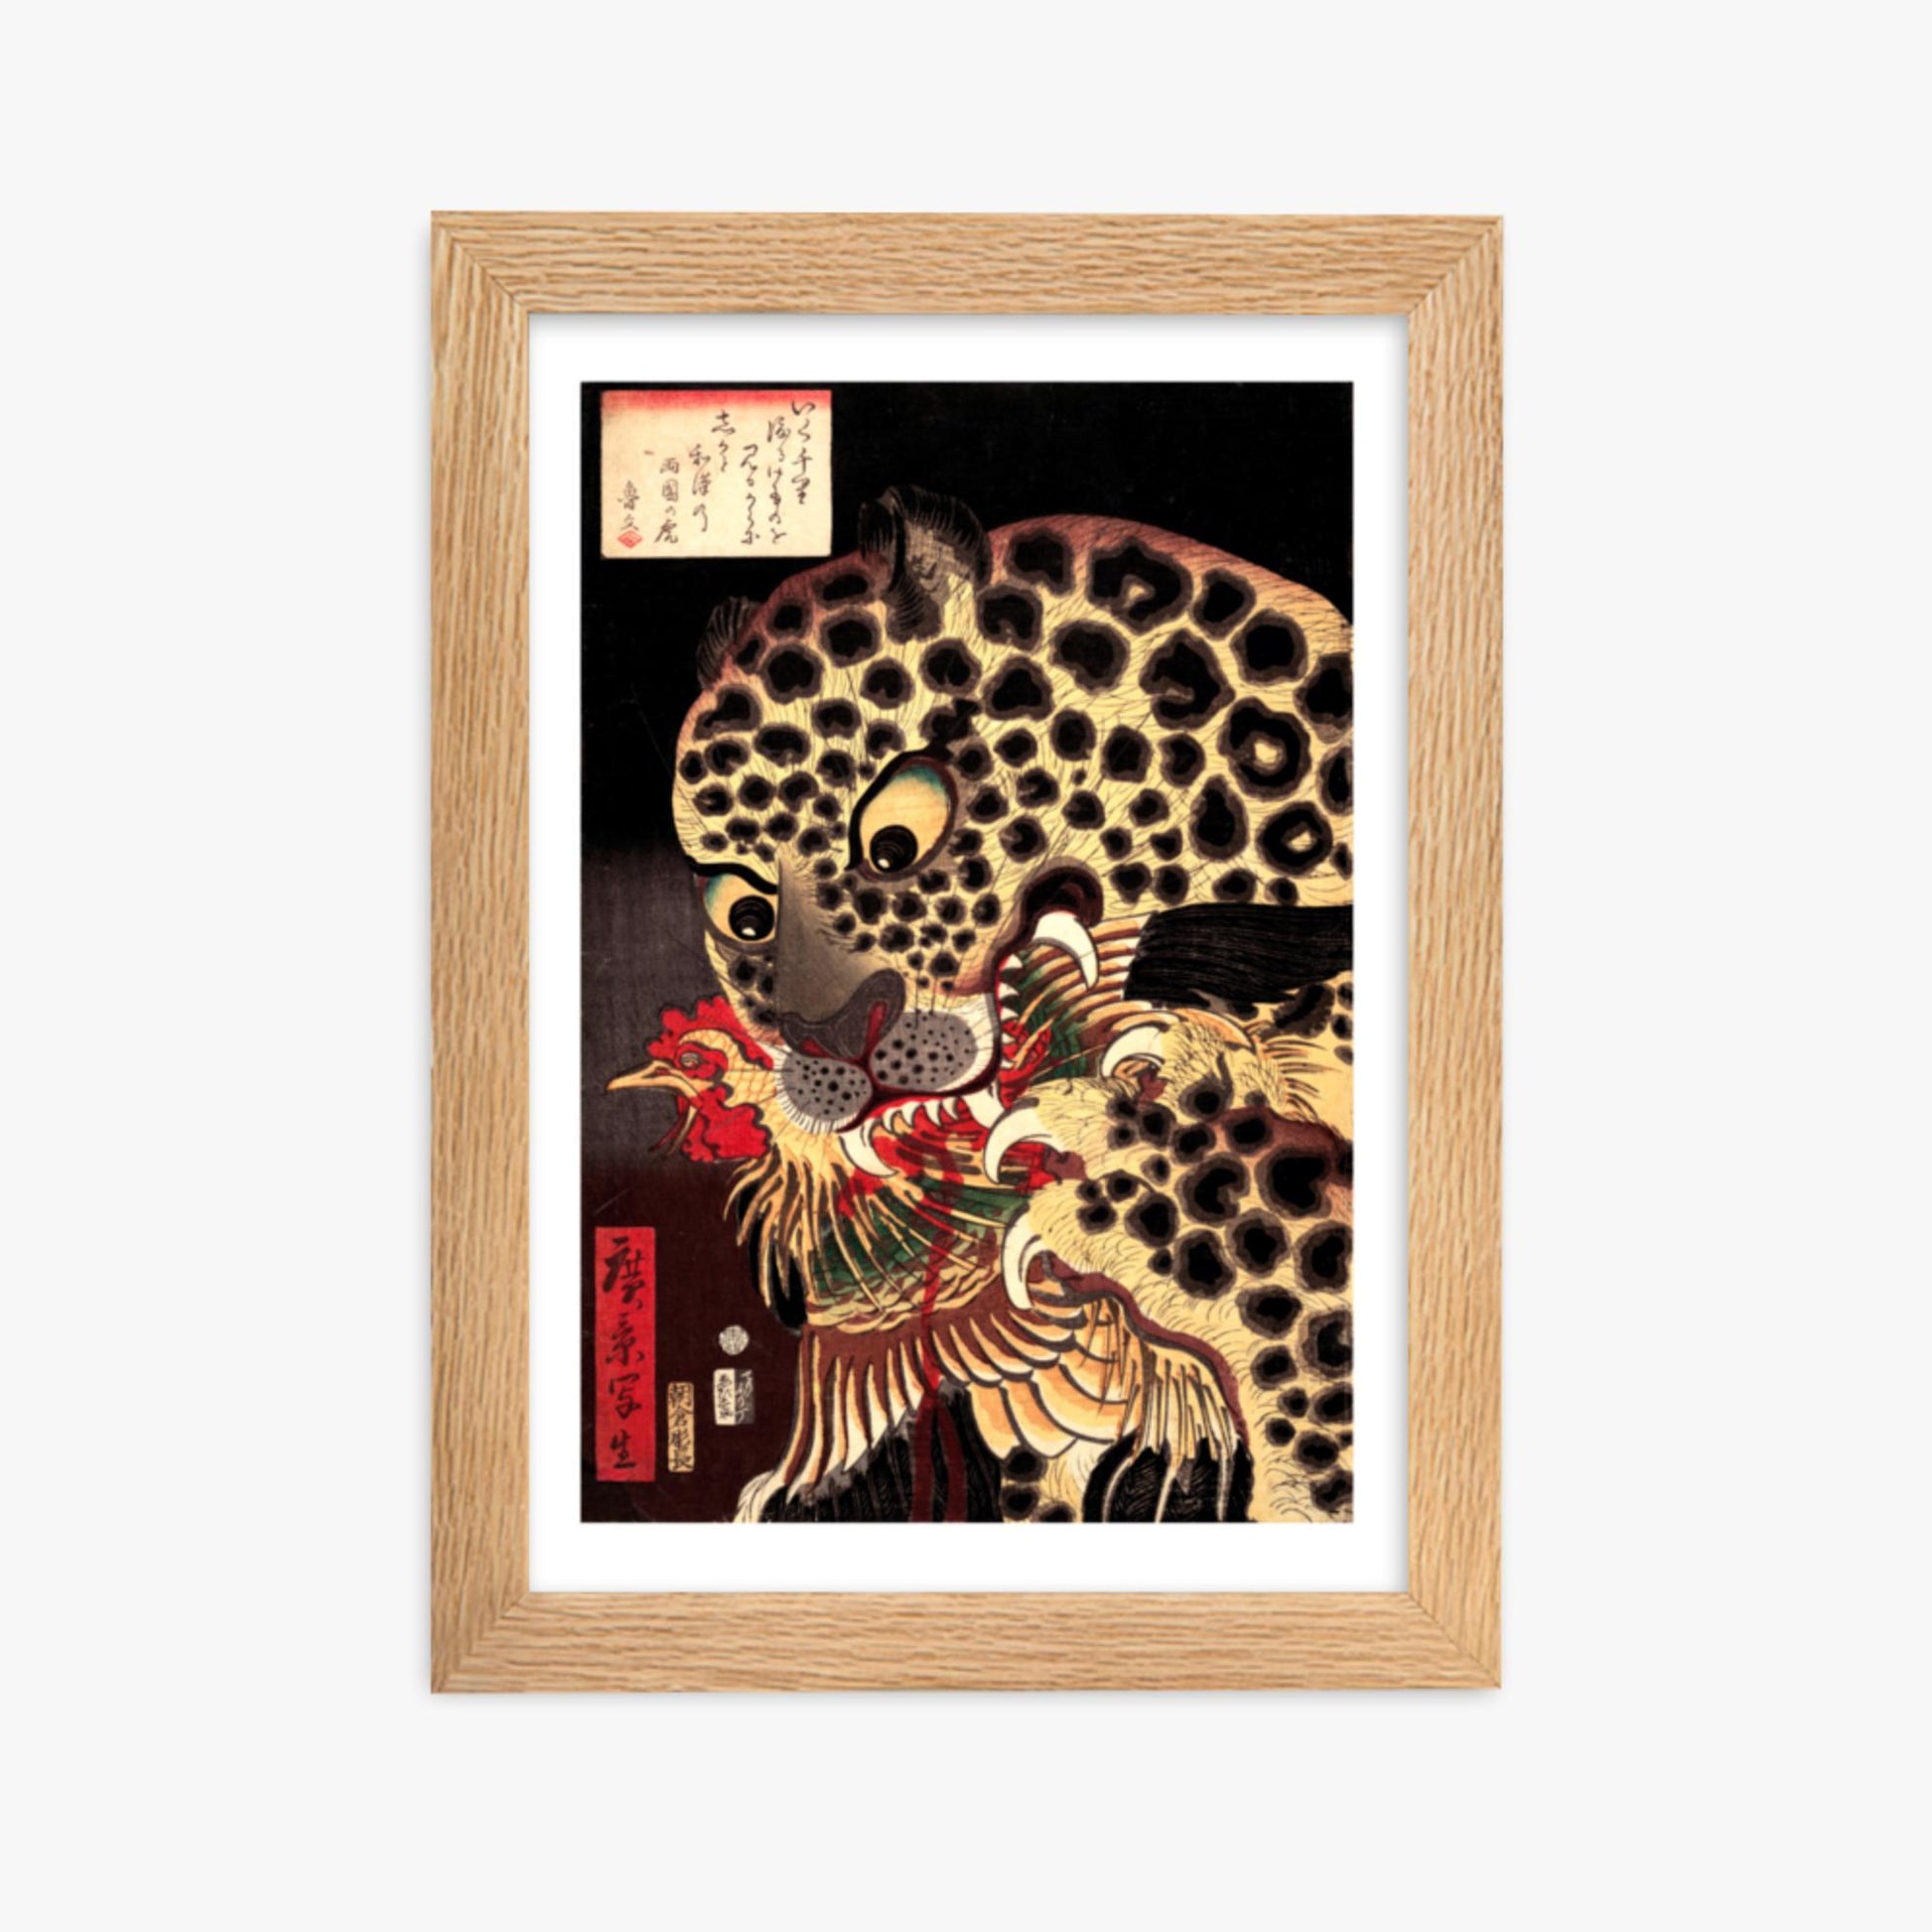 Utagawa Hirokage - The Tiger of Ryōkoku 21x30 cm Poster With Oak Frame